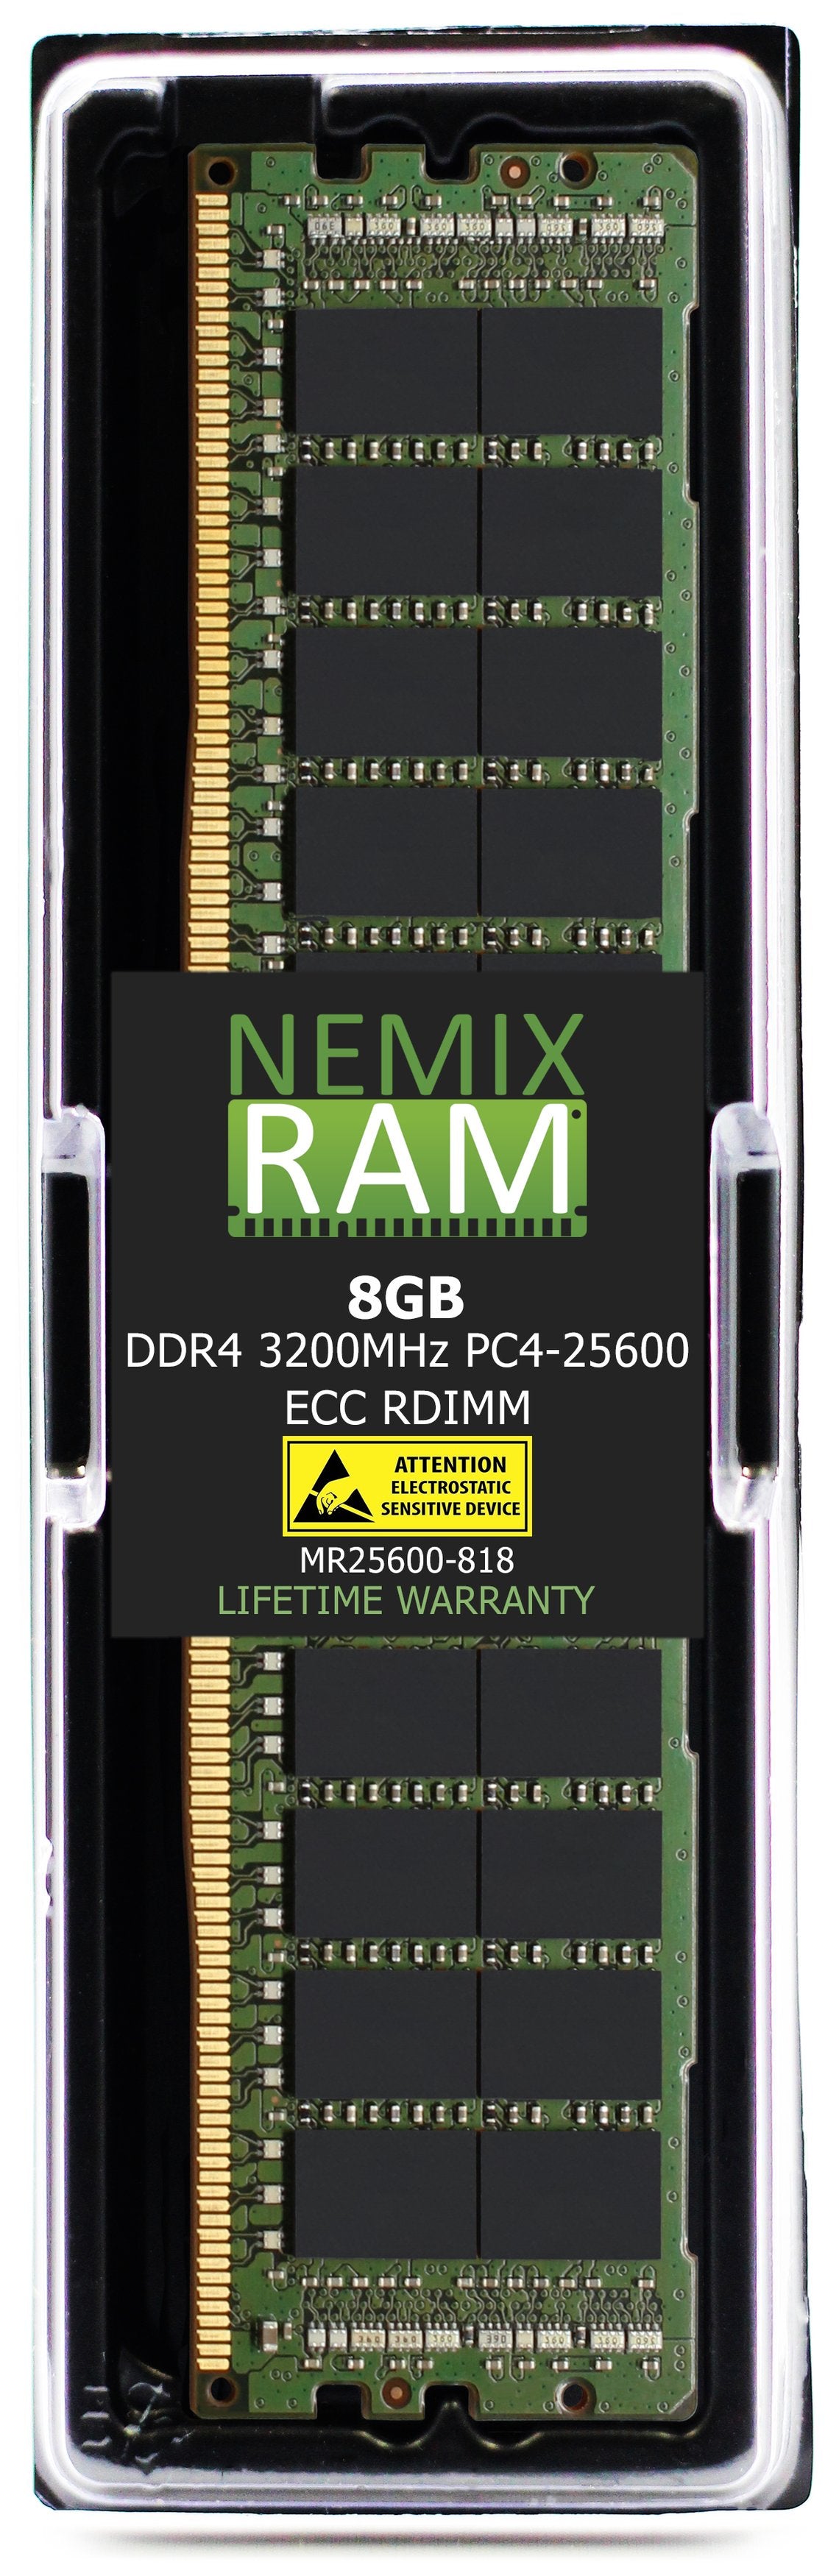 8GB DDR4 3200MHZ PC4-25600 RDIMM Compatible with Supermicro MEM-DR480LB-ER32